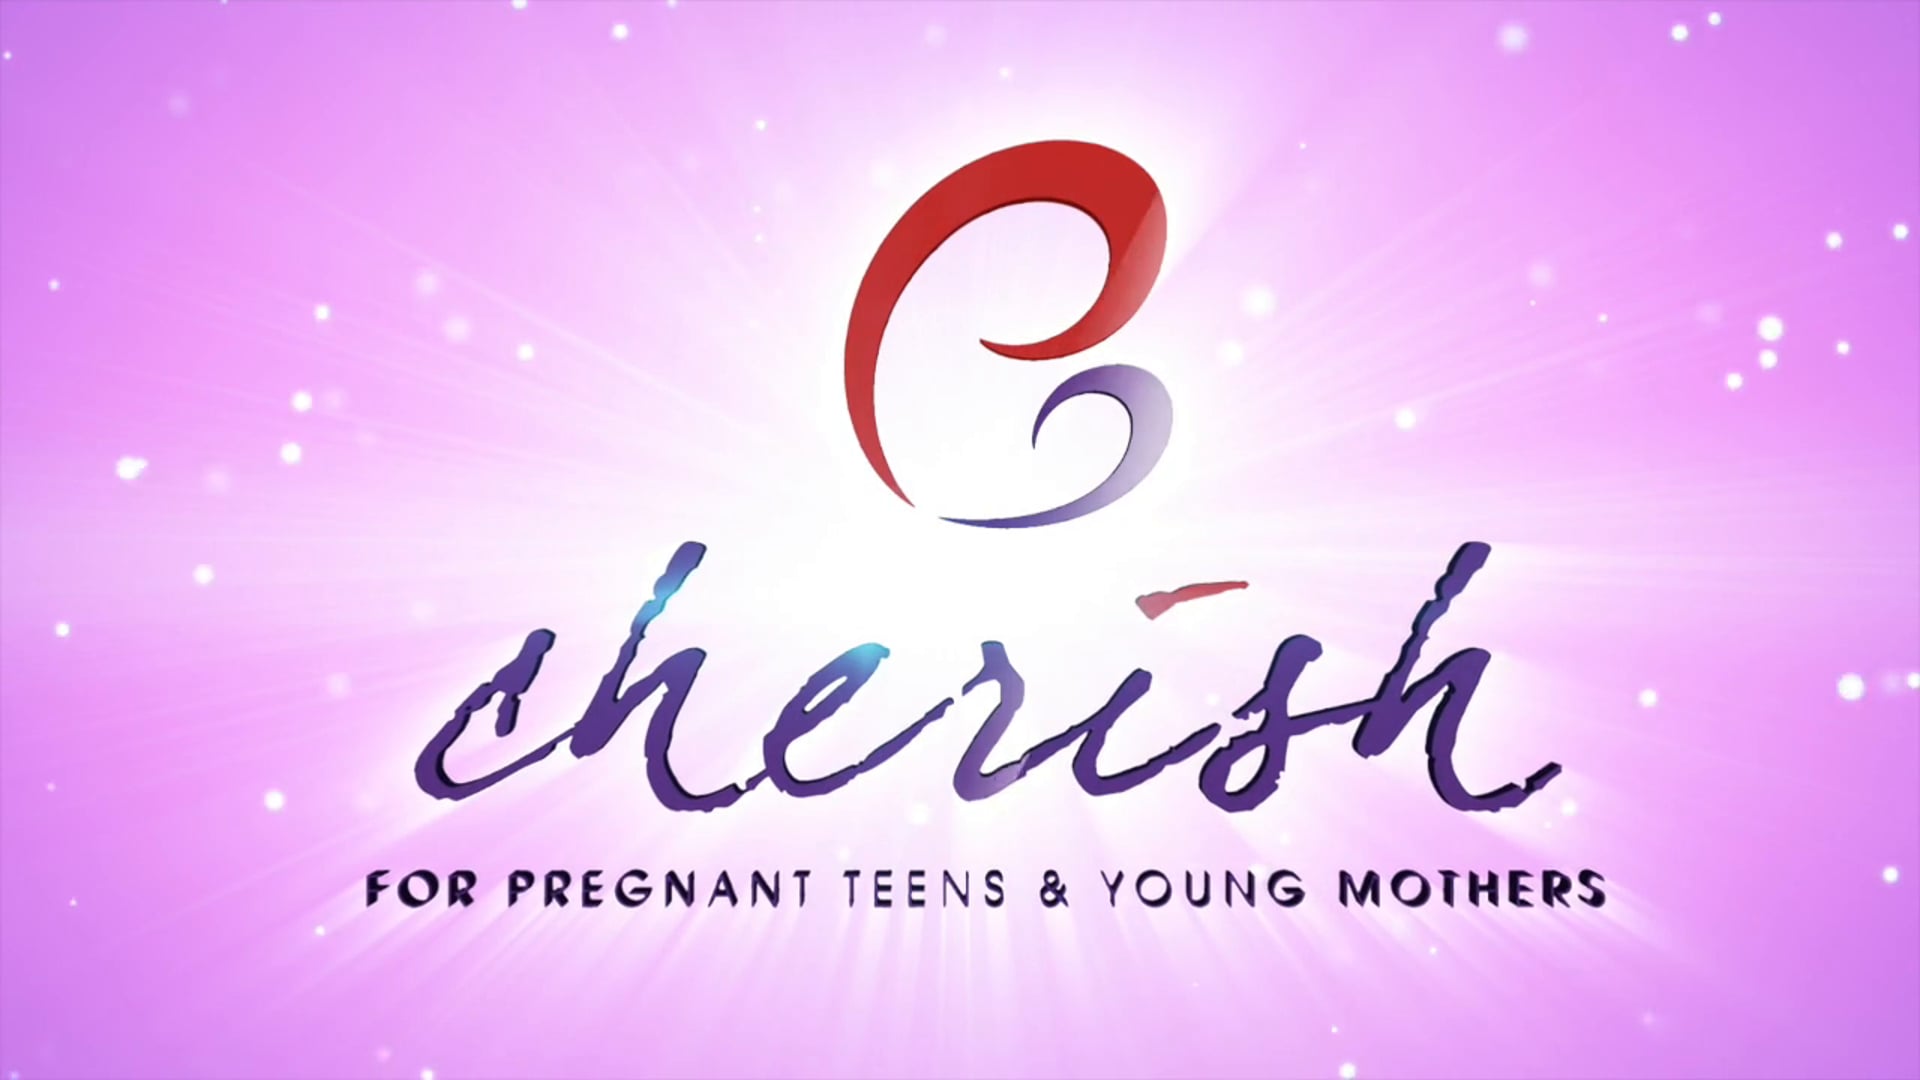 Cherish Ministry Video 2015